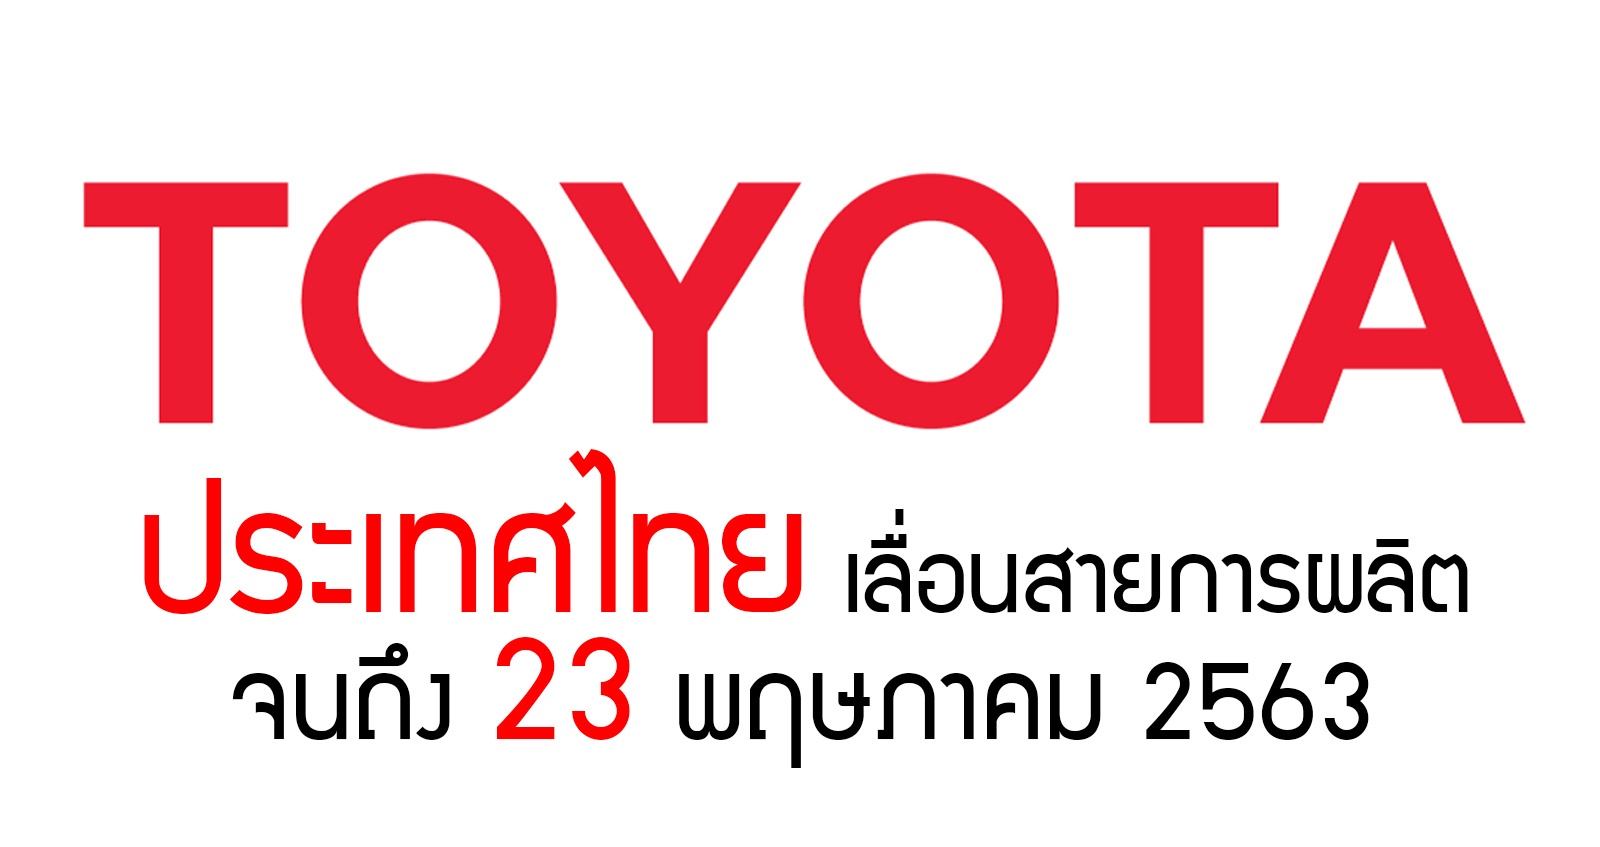 TOYOTA ประเทศไทย เลื่อนไลน์การผลิต รอบที่ 3 จนถึง 23 พฤษภาคม 2563